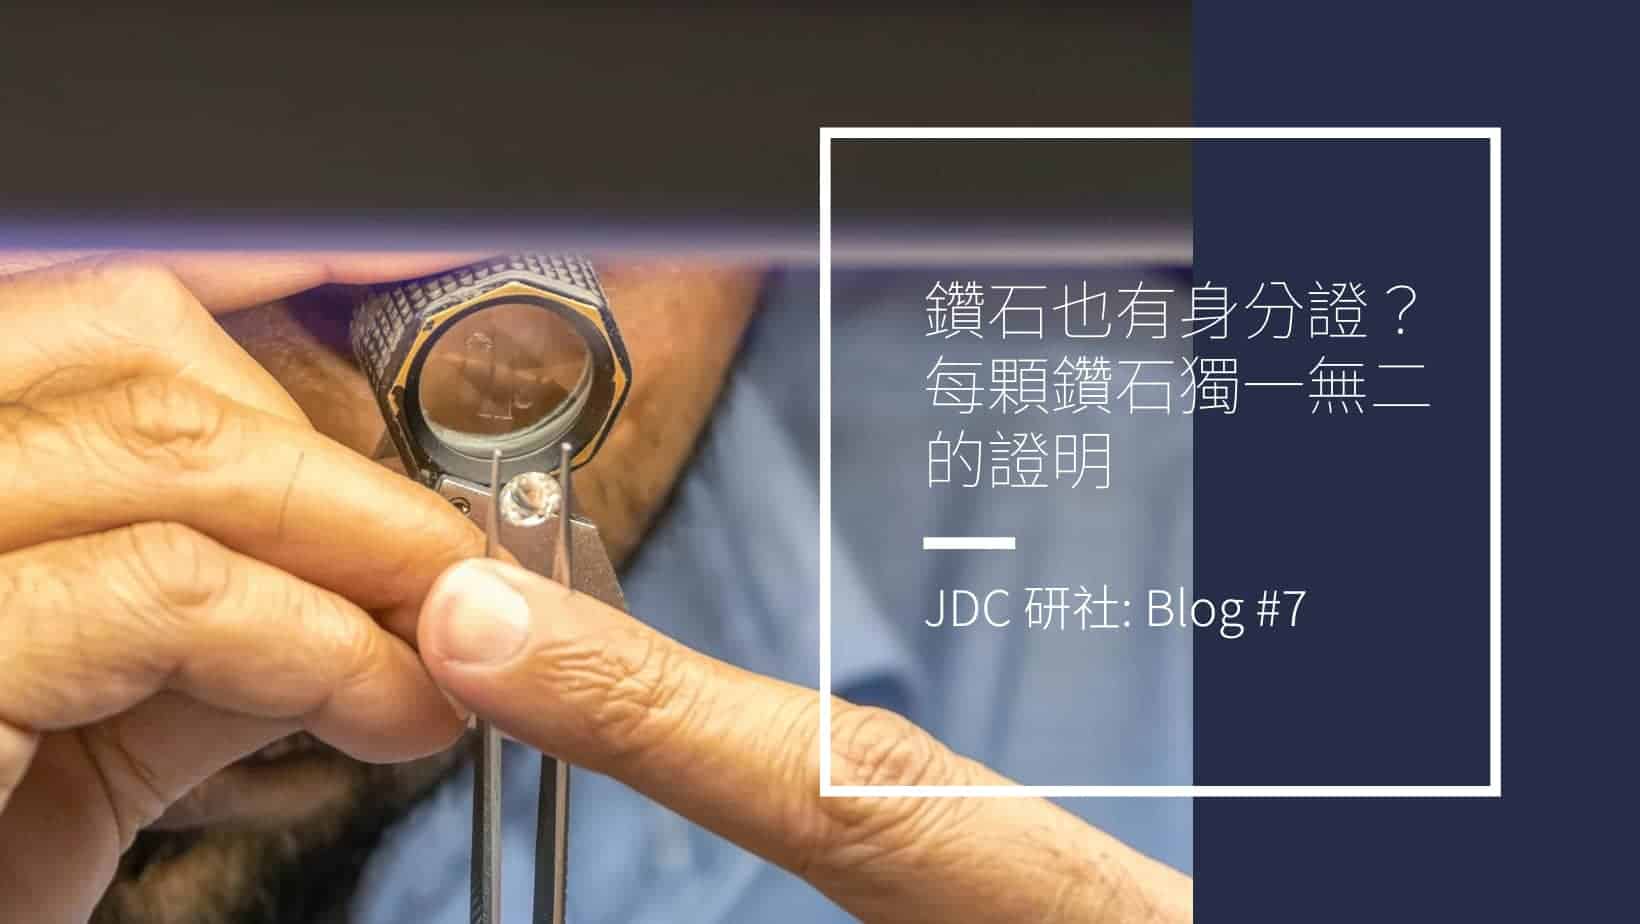 JDC Blog#7